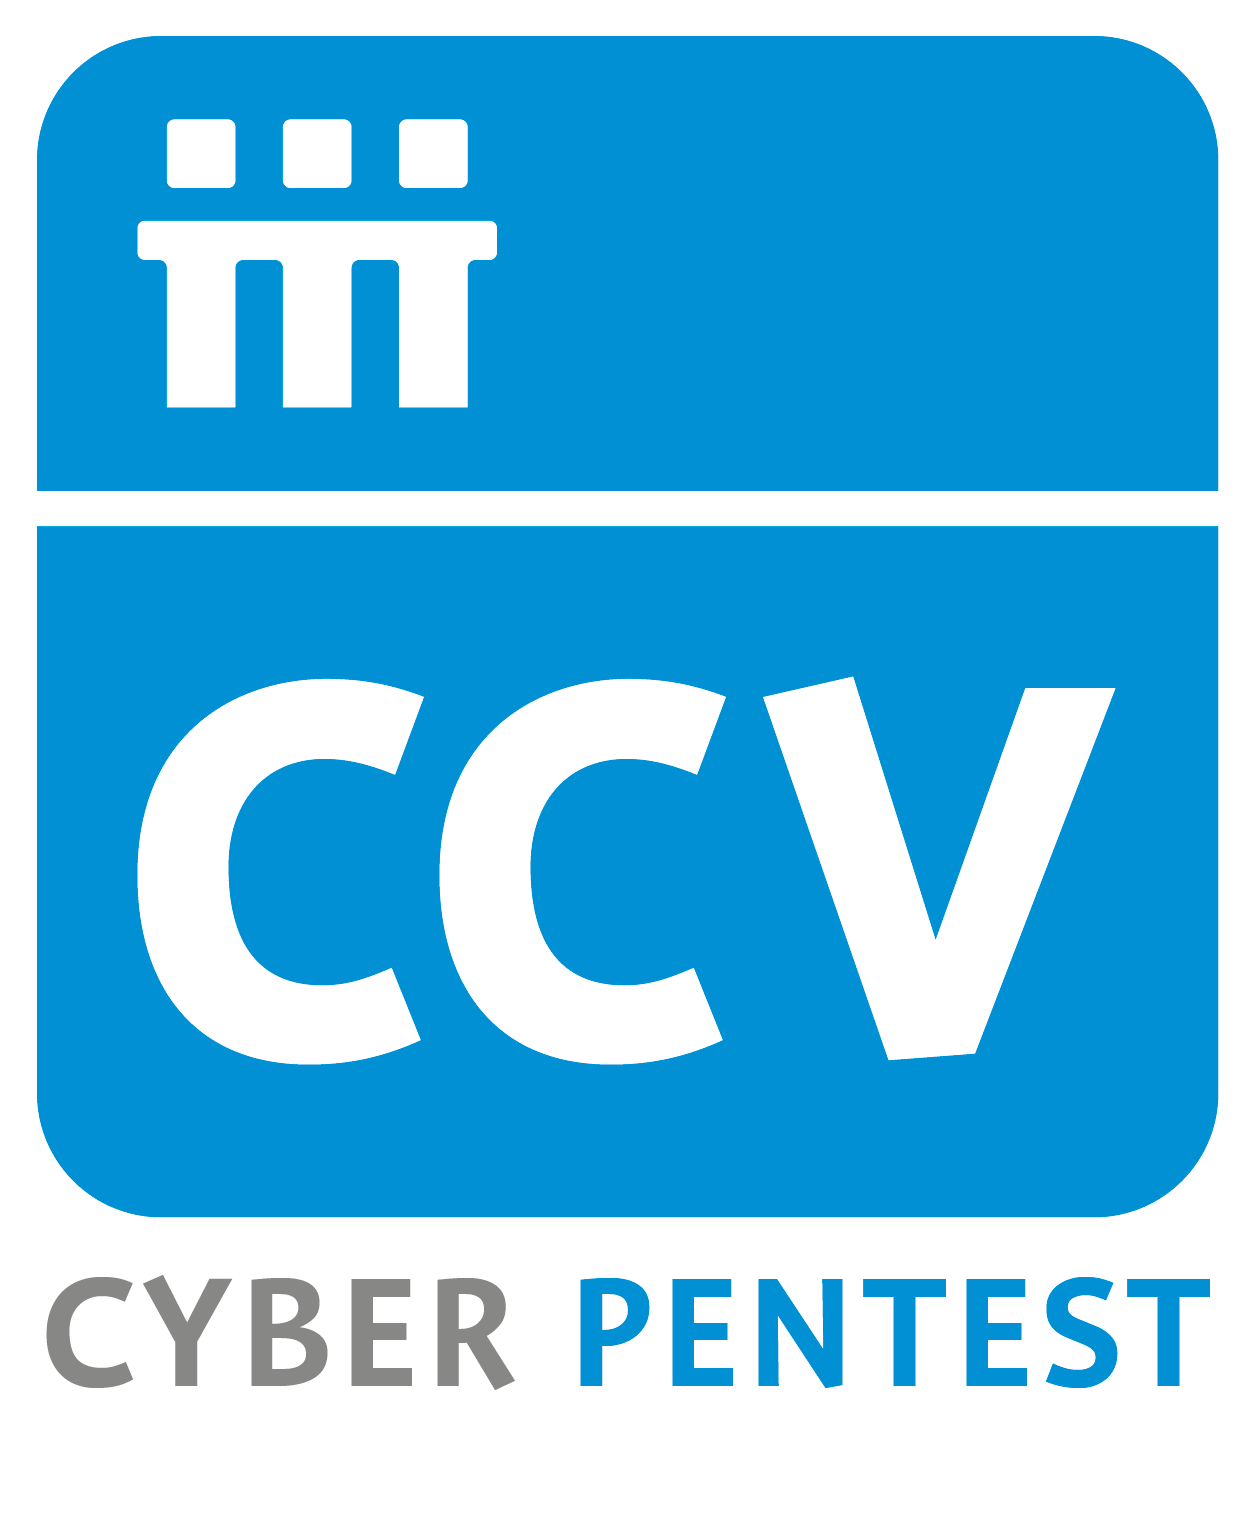 CCV Cyber Pentest